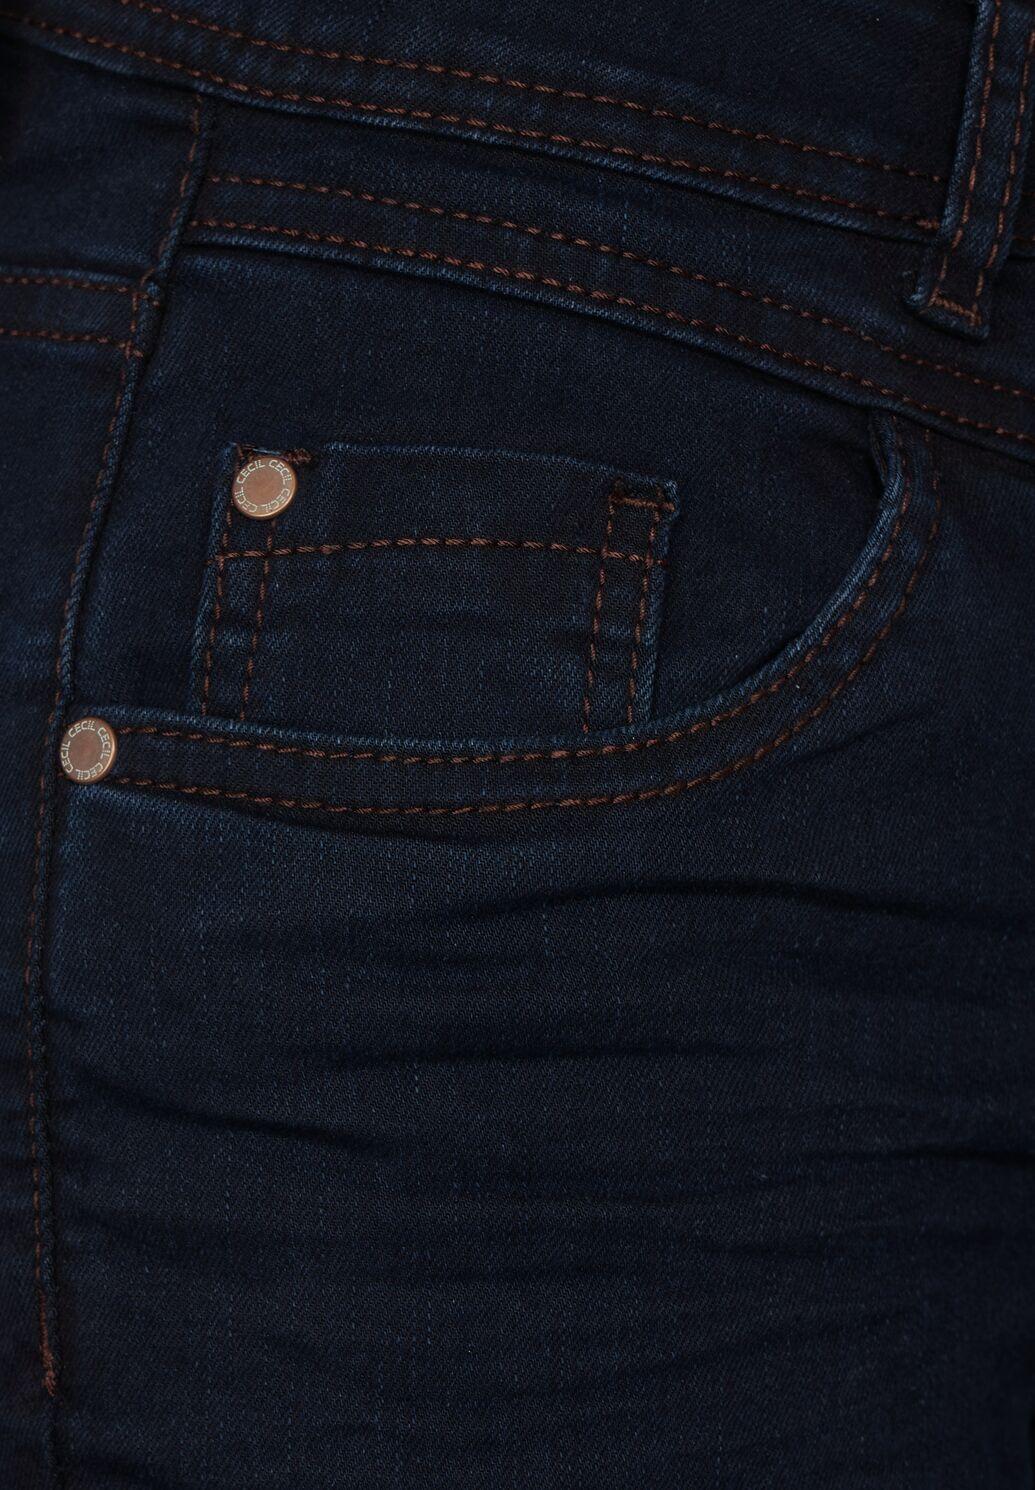 CECIL - Dunkle Jeans Hose im Style Toronto in blau schwarz B376495-14437